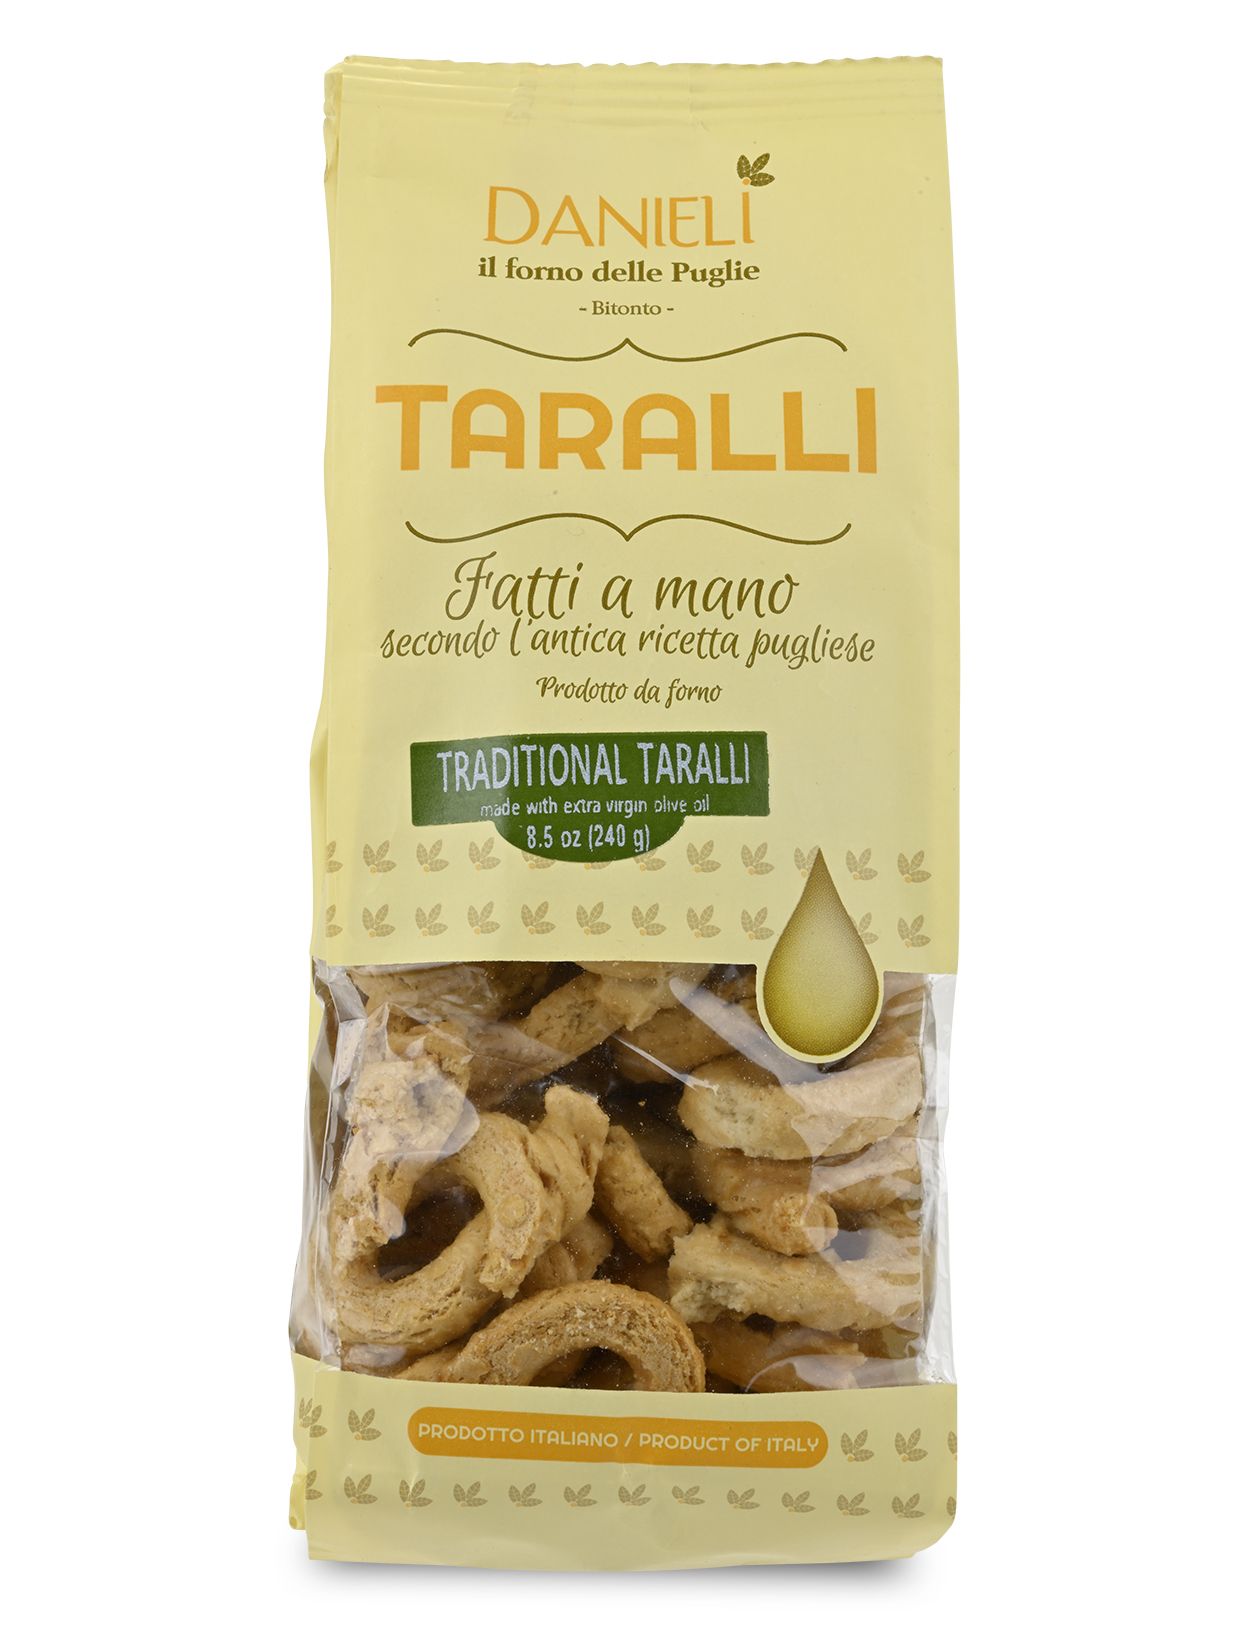 Taralli Tradizionali - Traditional